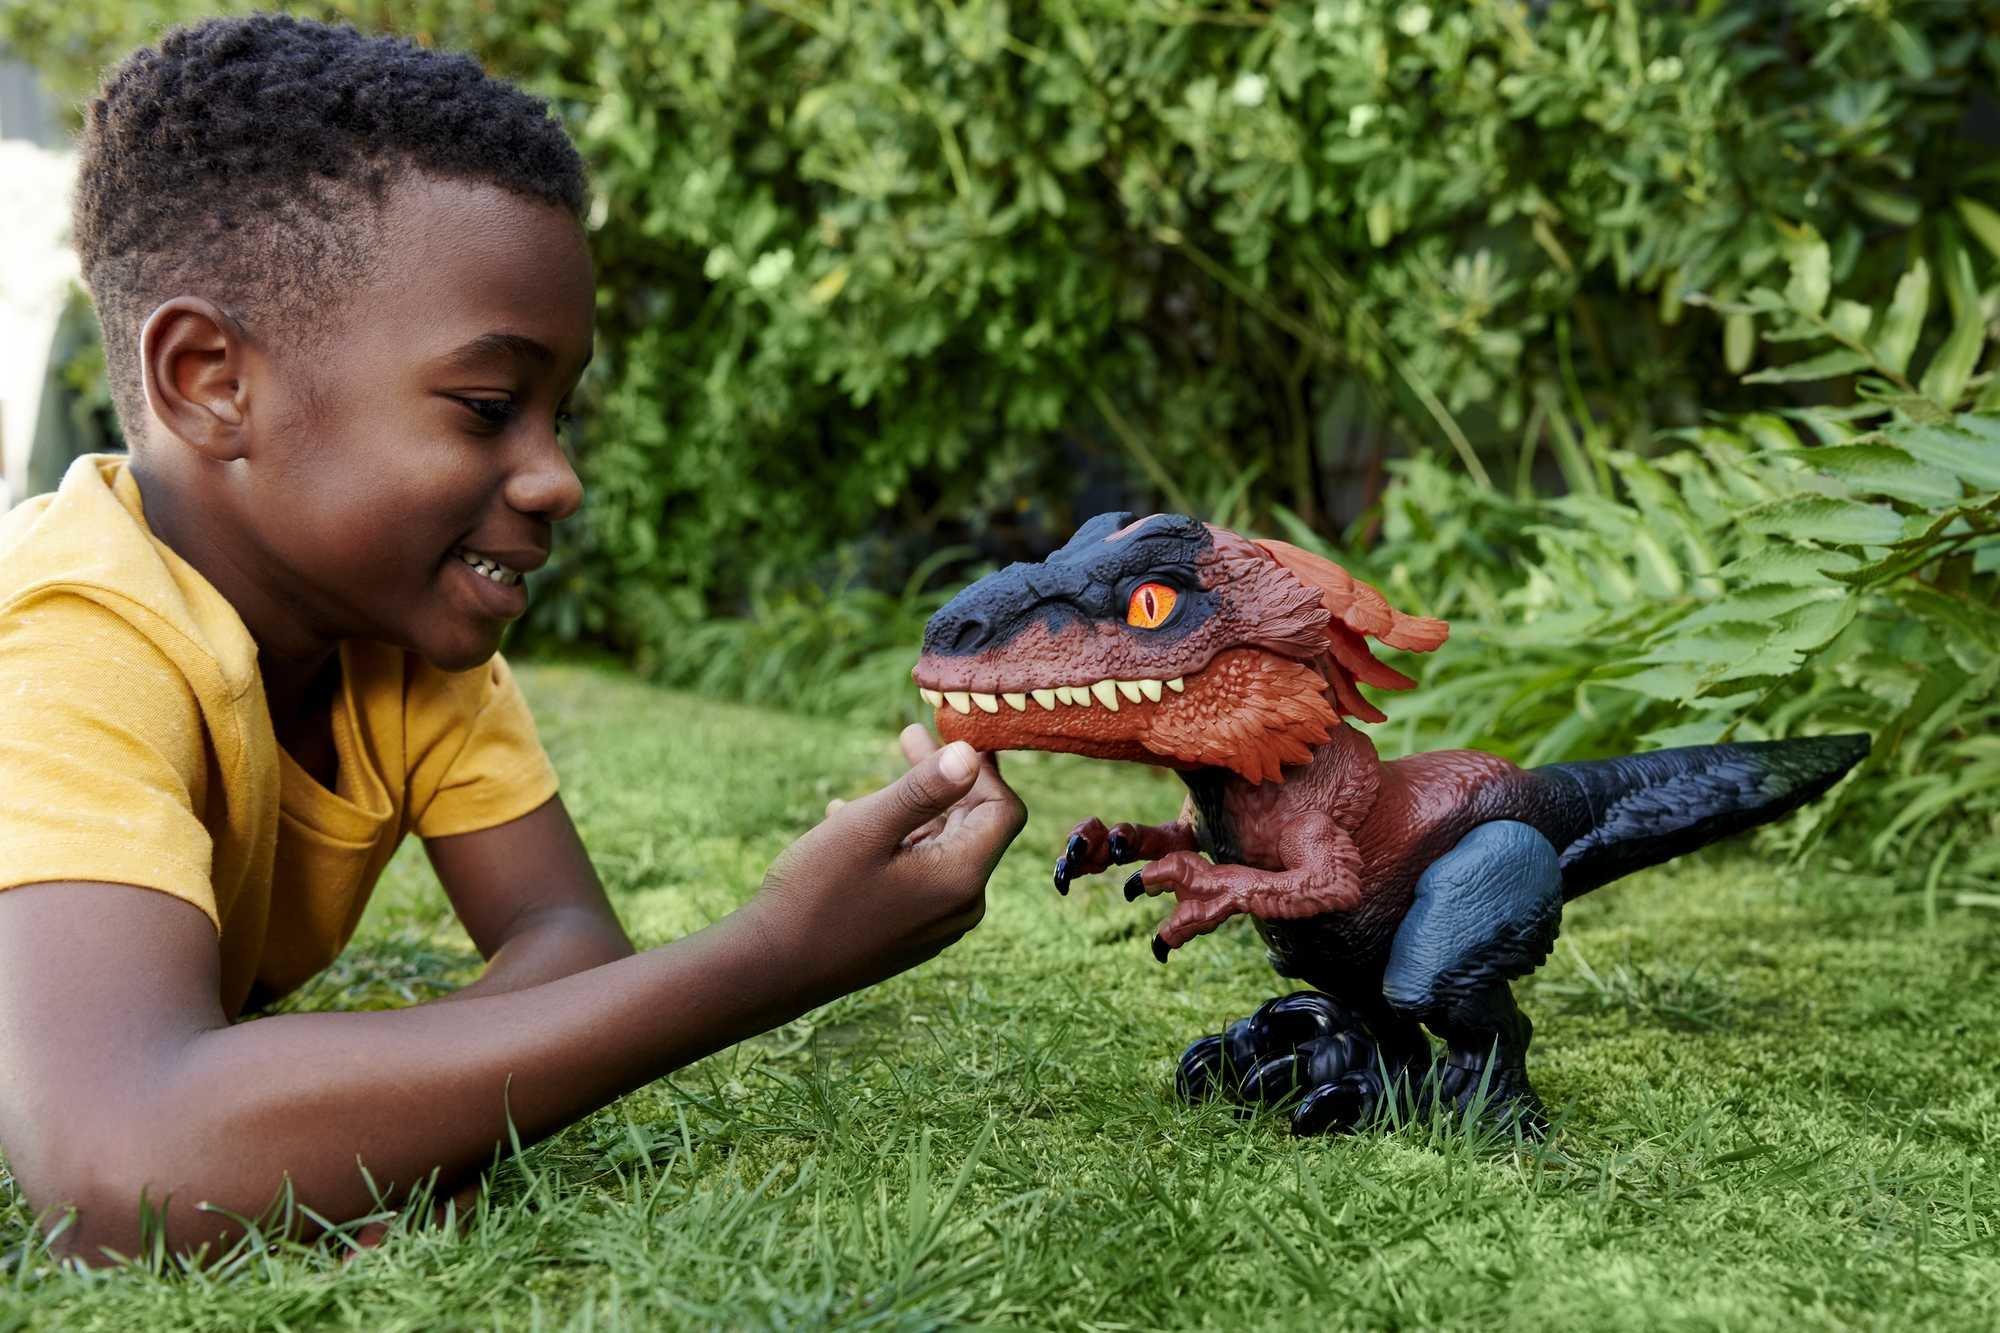 Mattel  Jurassic World GWD70 action figure giocattolo 